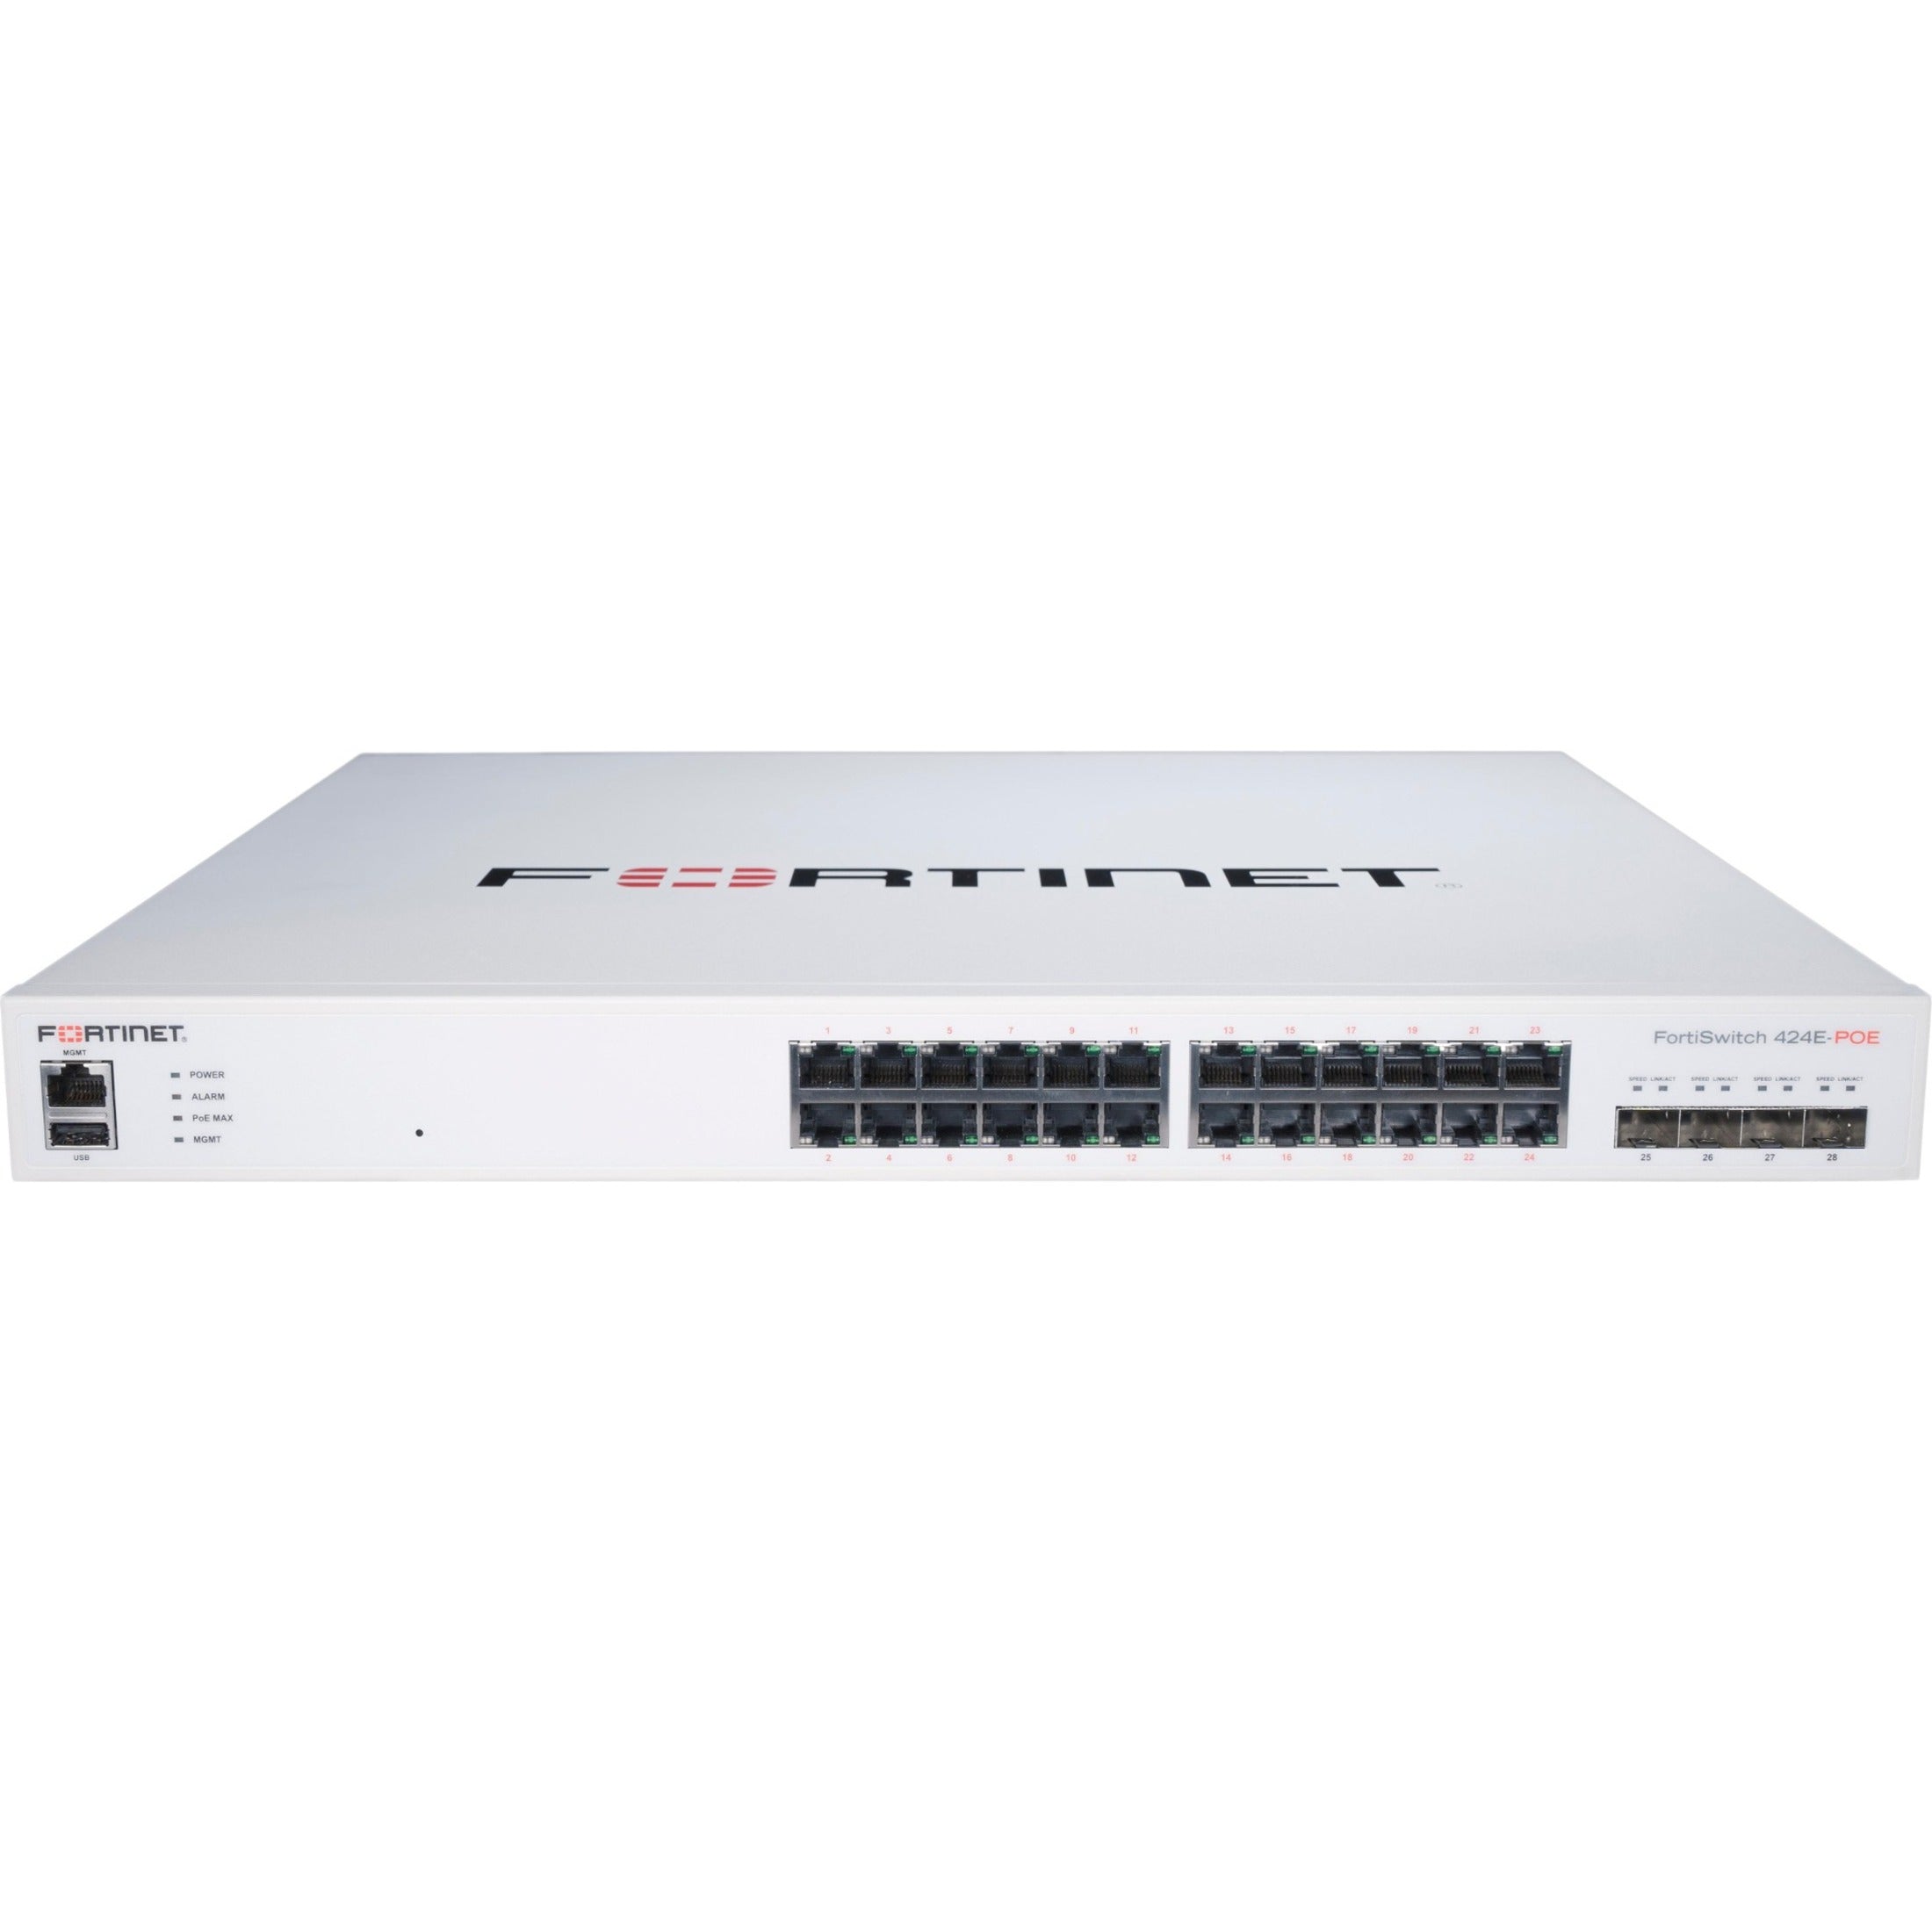 Fortinet FS-424E-POE Layer 3 Switch, 24 Port Gigabit Ethernet PoE, 4 Port 10 Gigabit Ethernet Expansion Slot